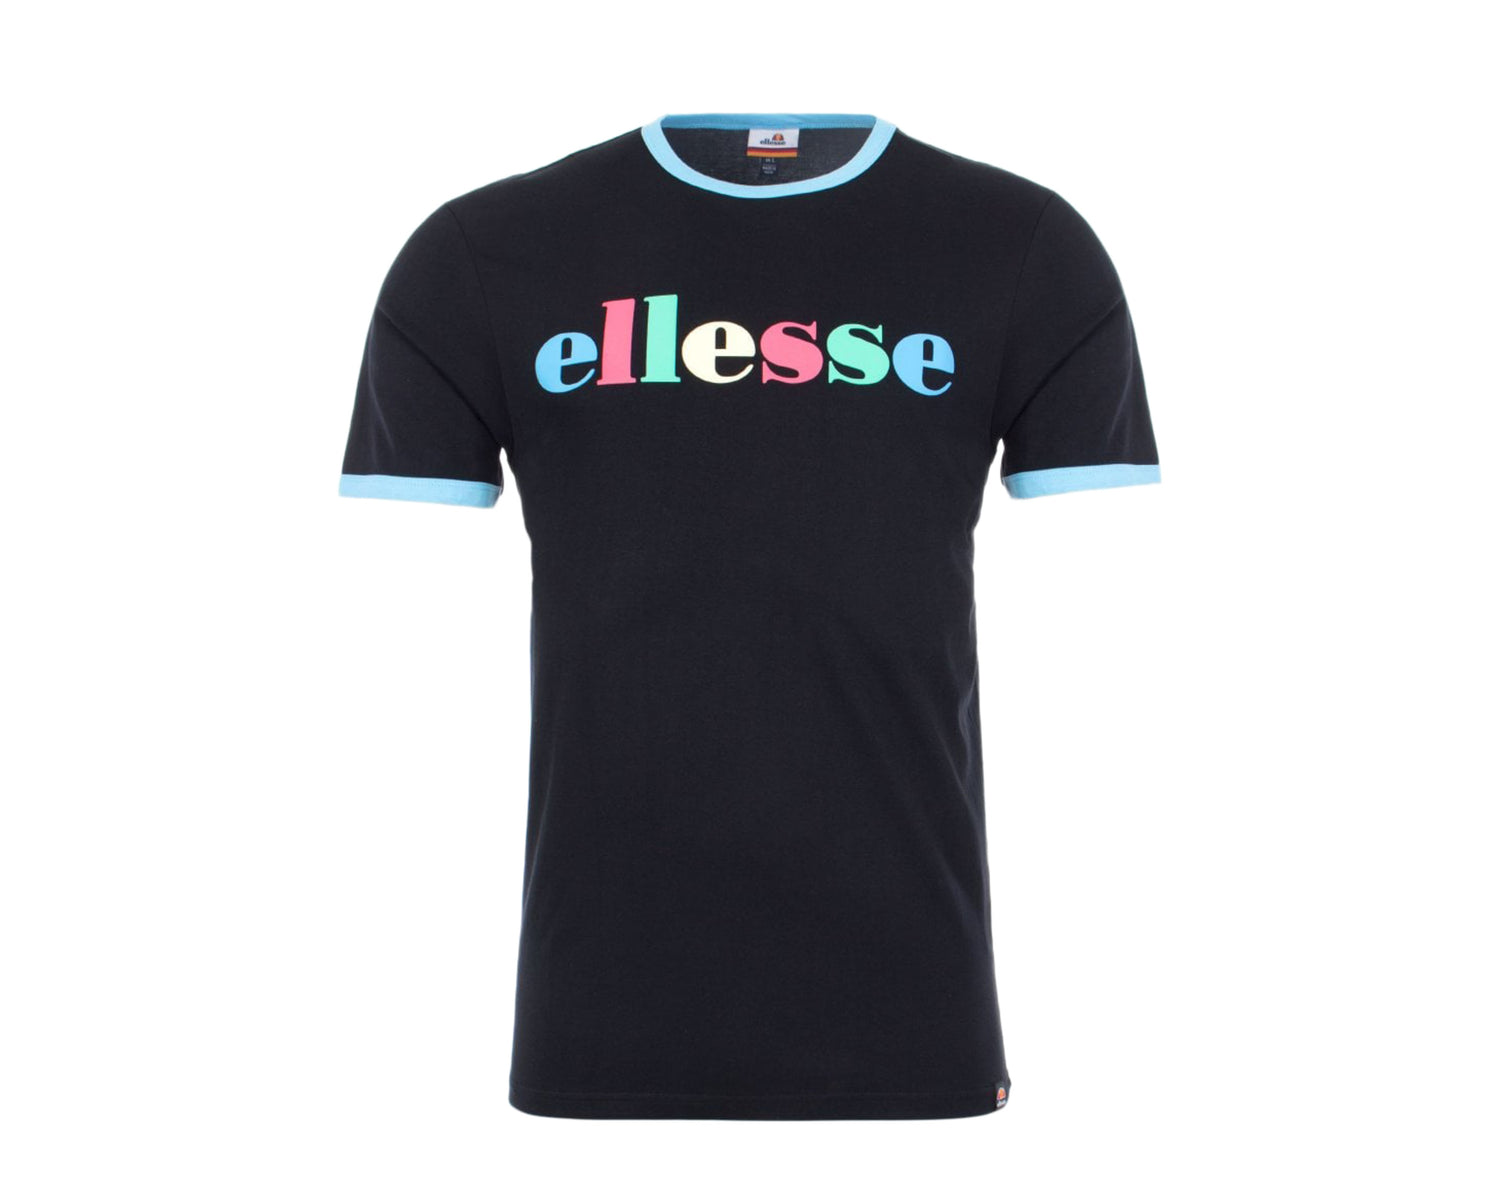 Ellesse Moa Men's T-Shirt